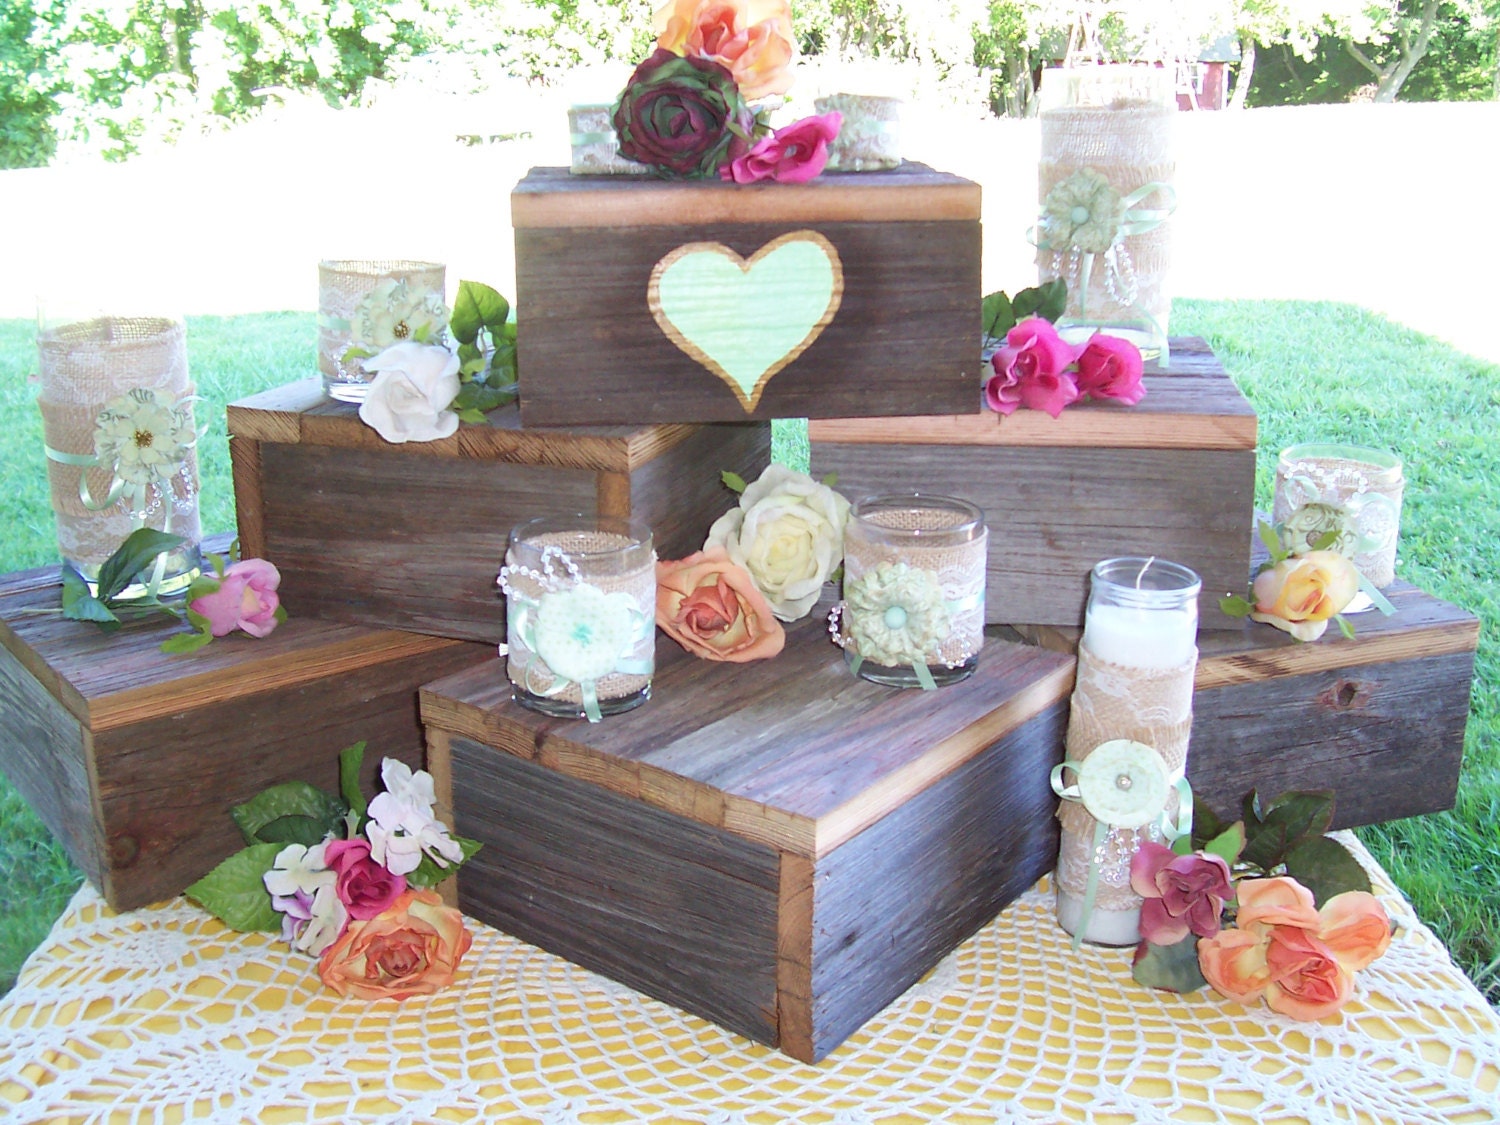 cupcake stand / cake stand / wood cake stand / rustic cake